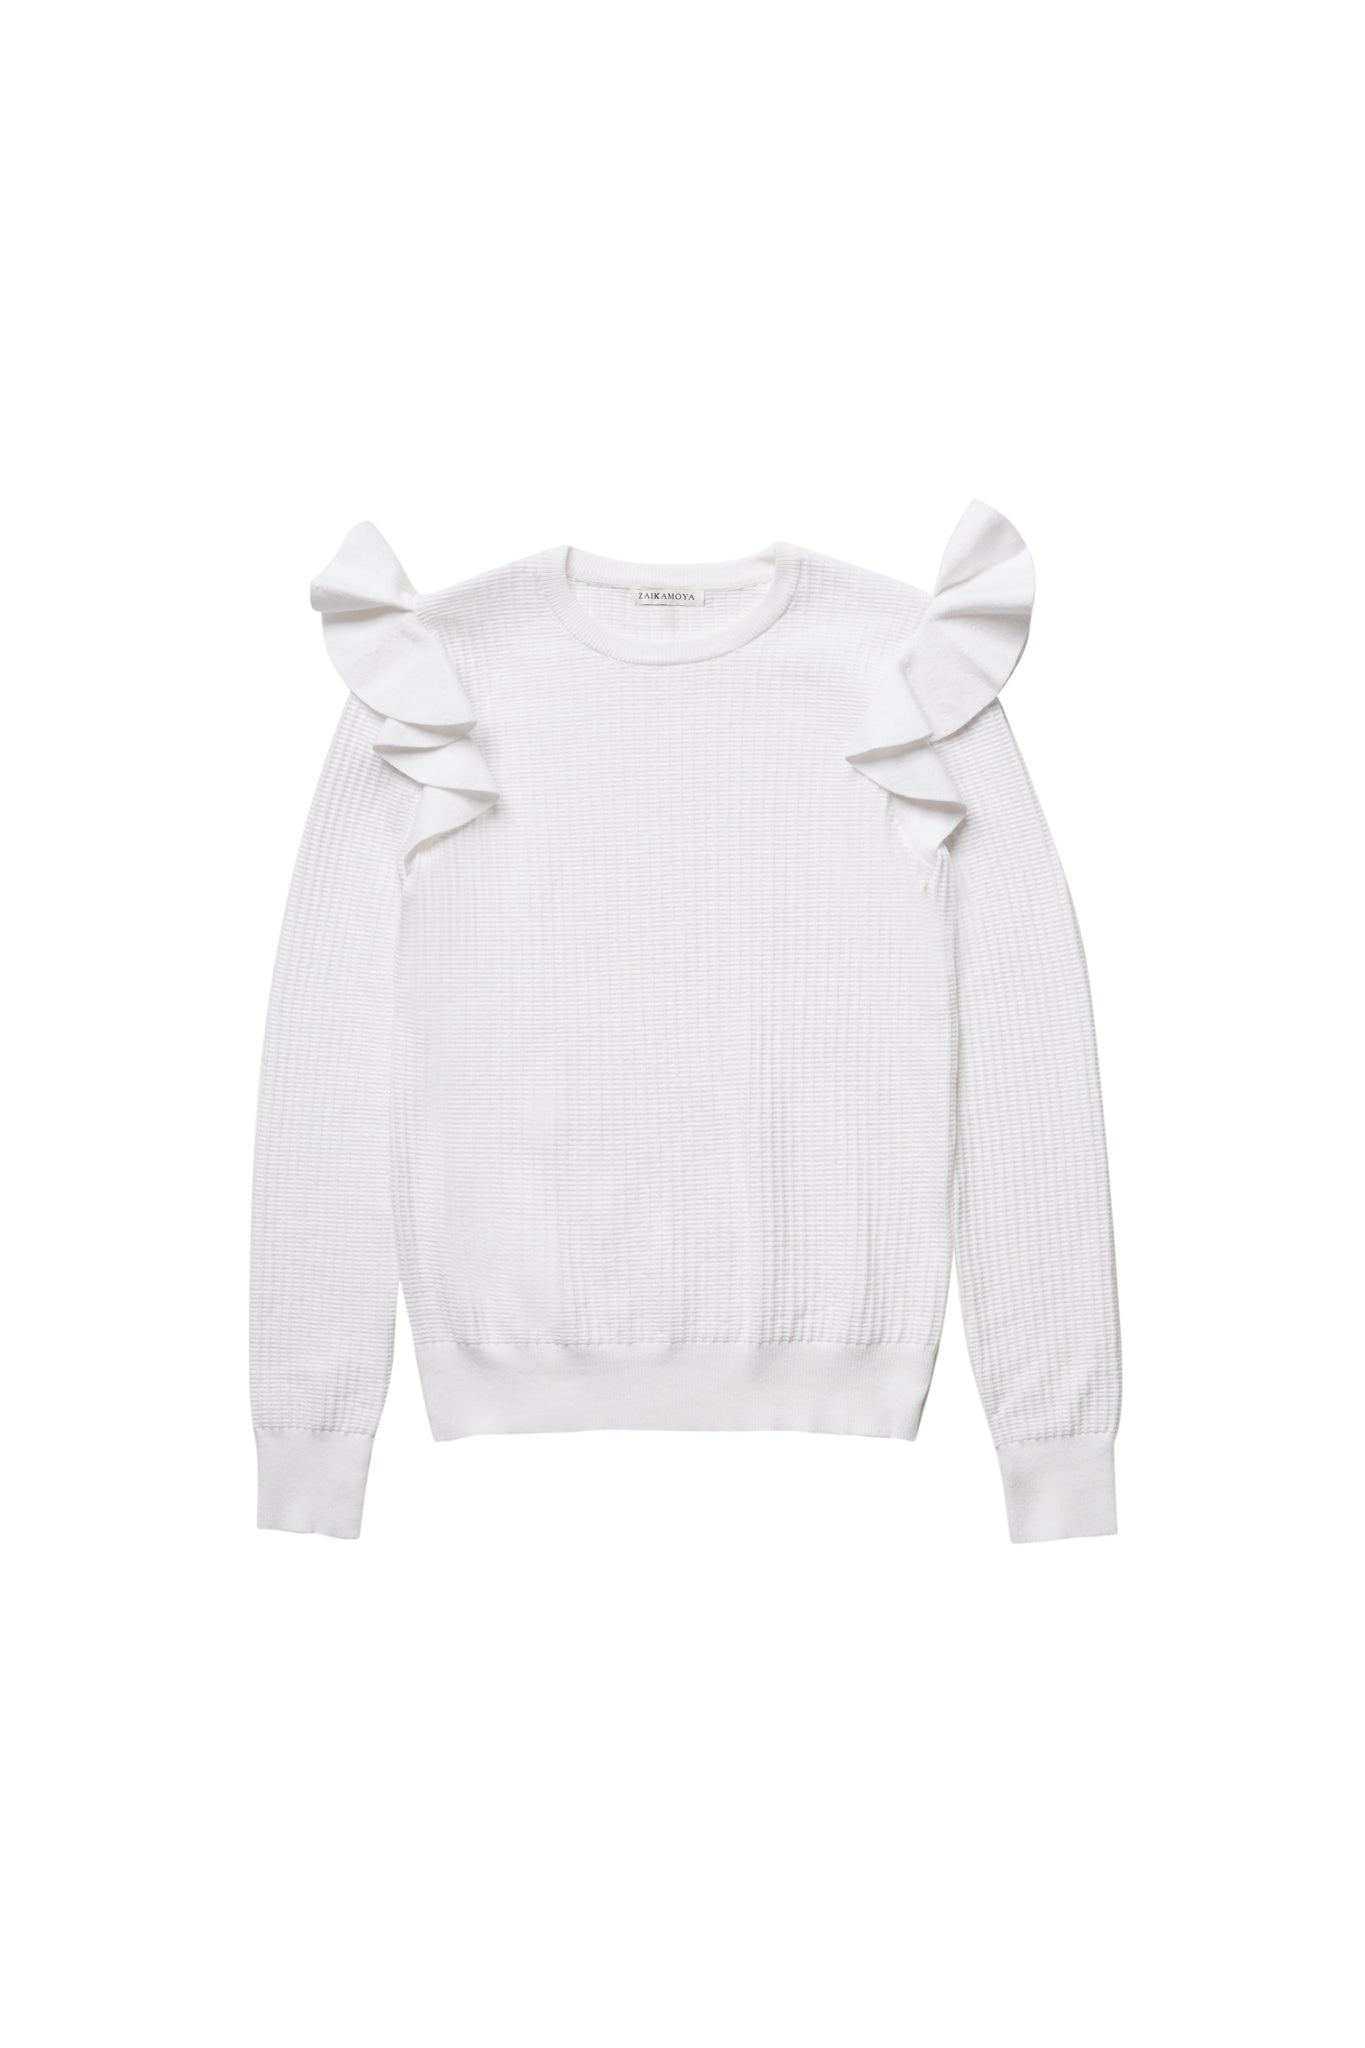 White Textured Sweater #1627W FINAL SALE